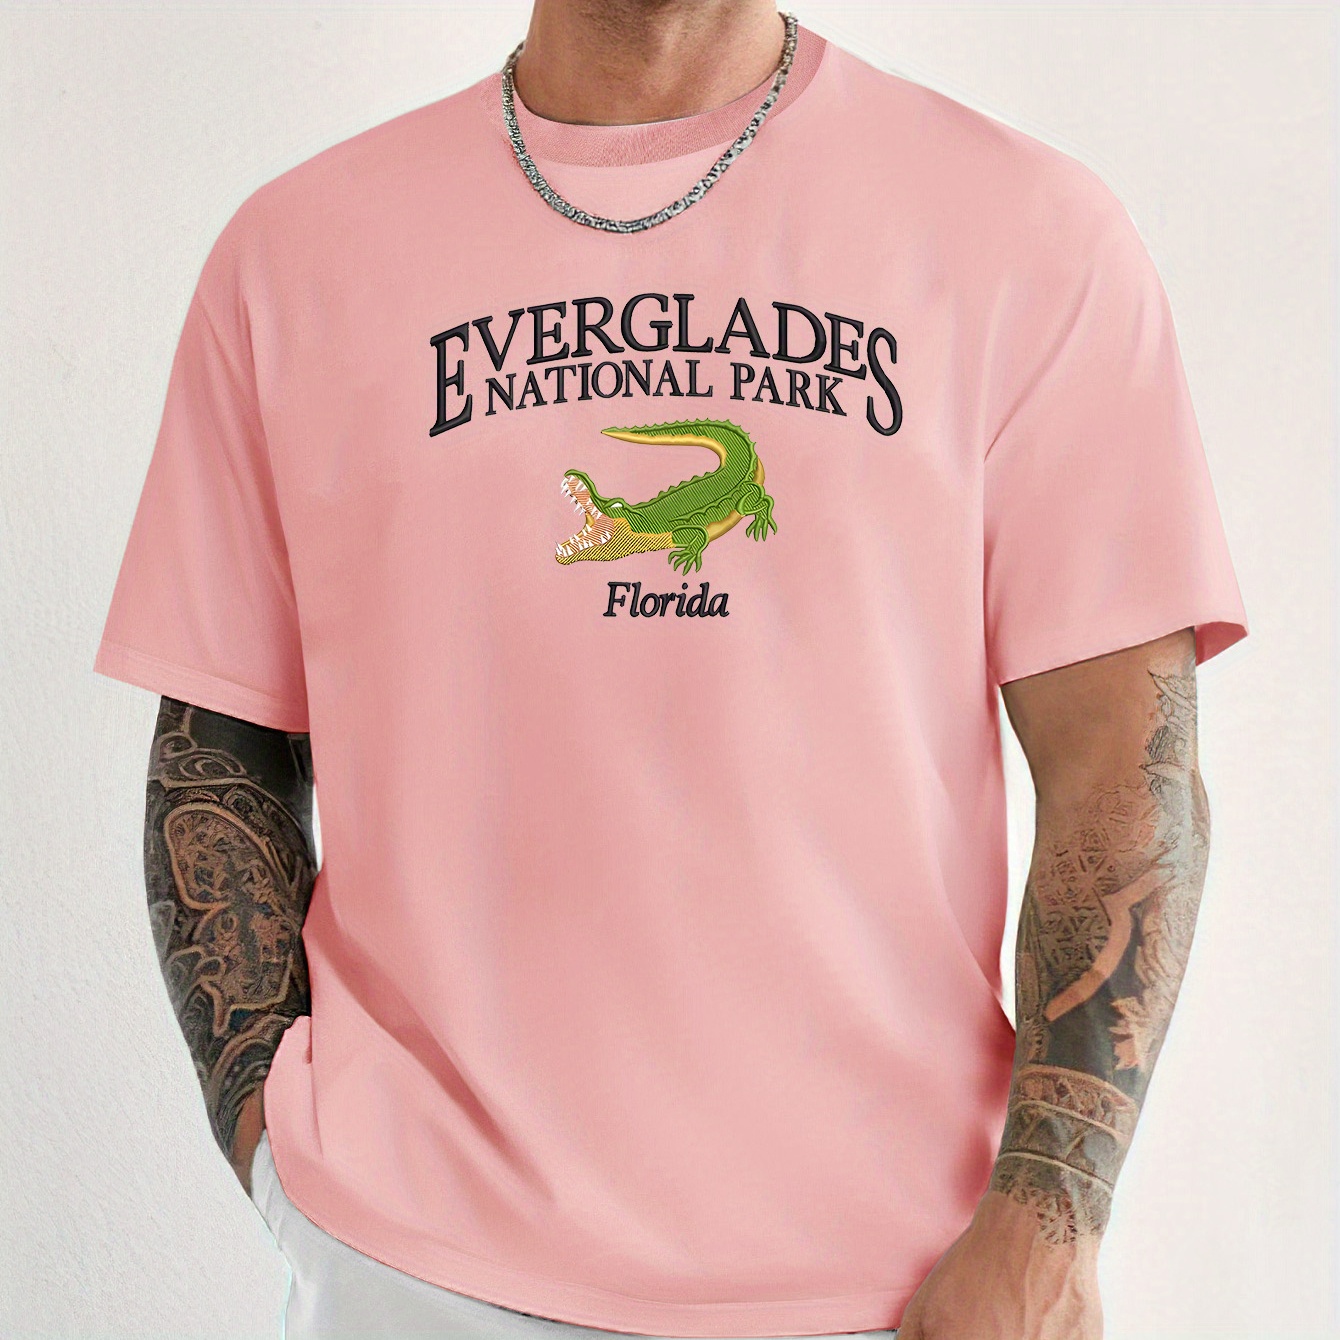 

Crocodile Cartoon Pattern Print Tee Shirt, Tees For Men, Casual Short Sleeve T-shirt For Summer